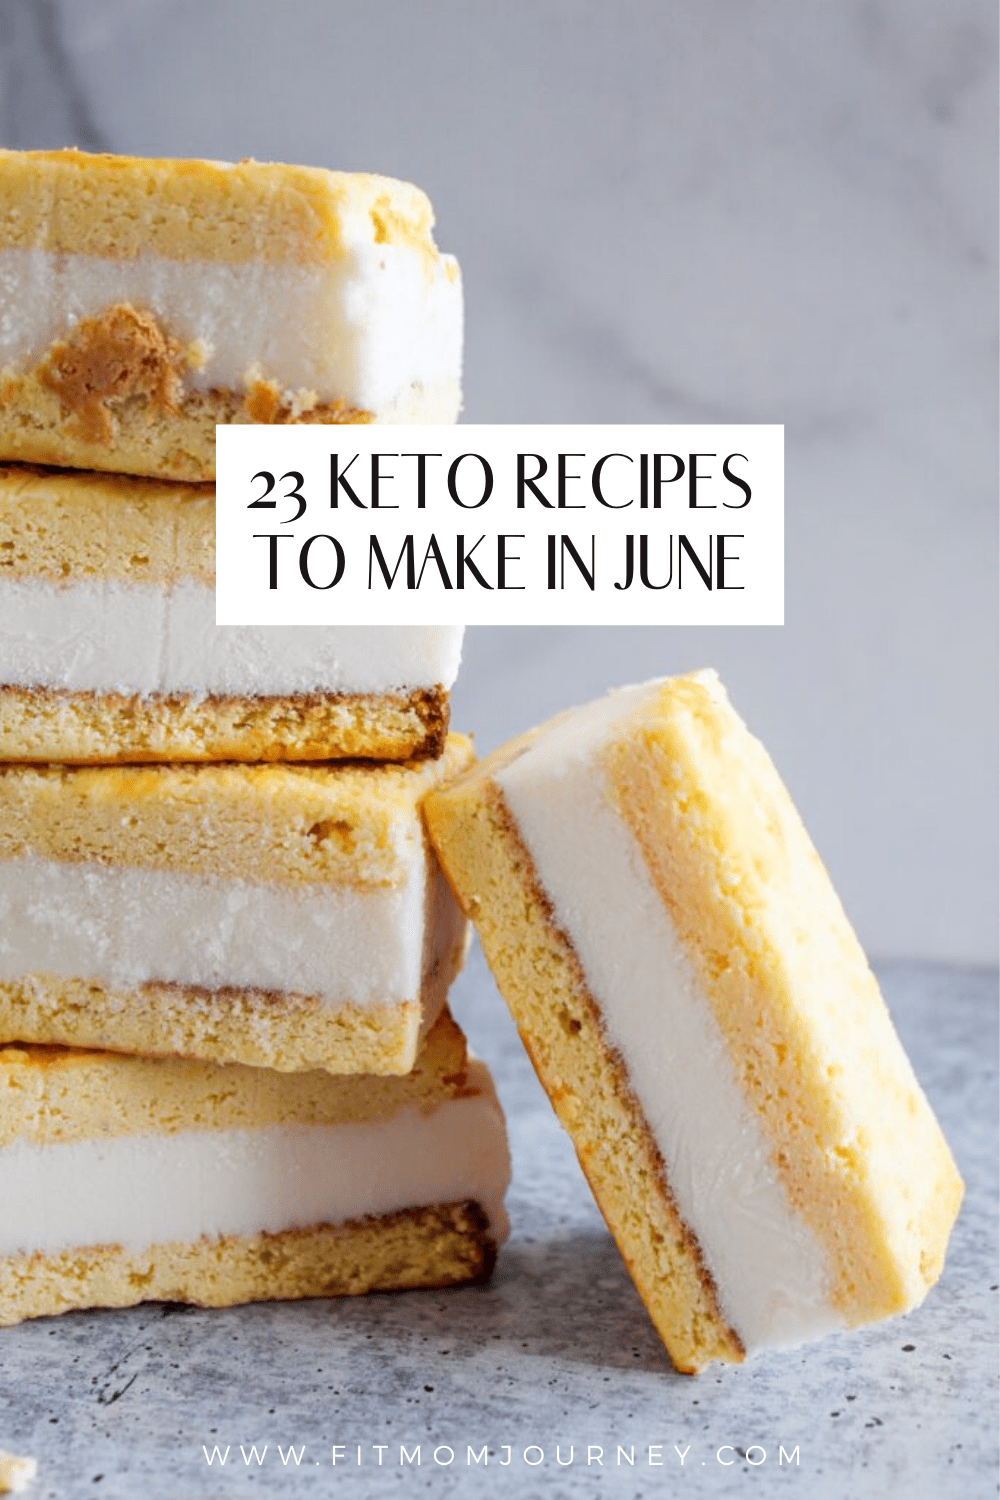 23 Fresh Keto Recipes To Make in June pic